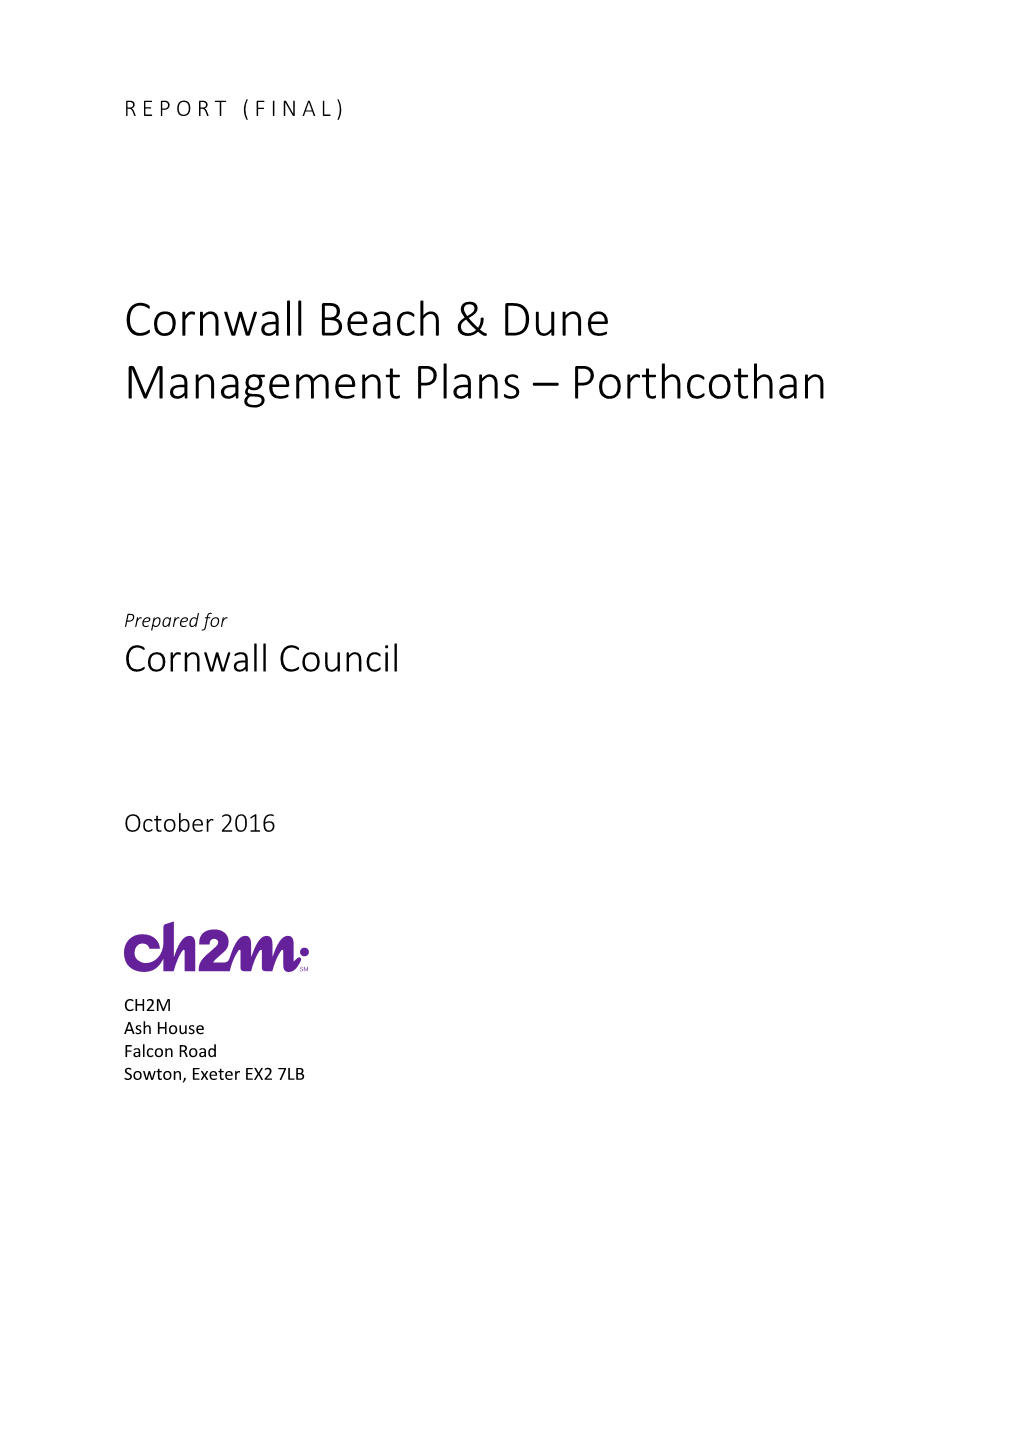 Cornwall Beach & Dune Management Plans – Porthcothan